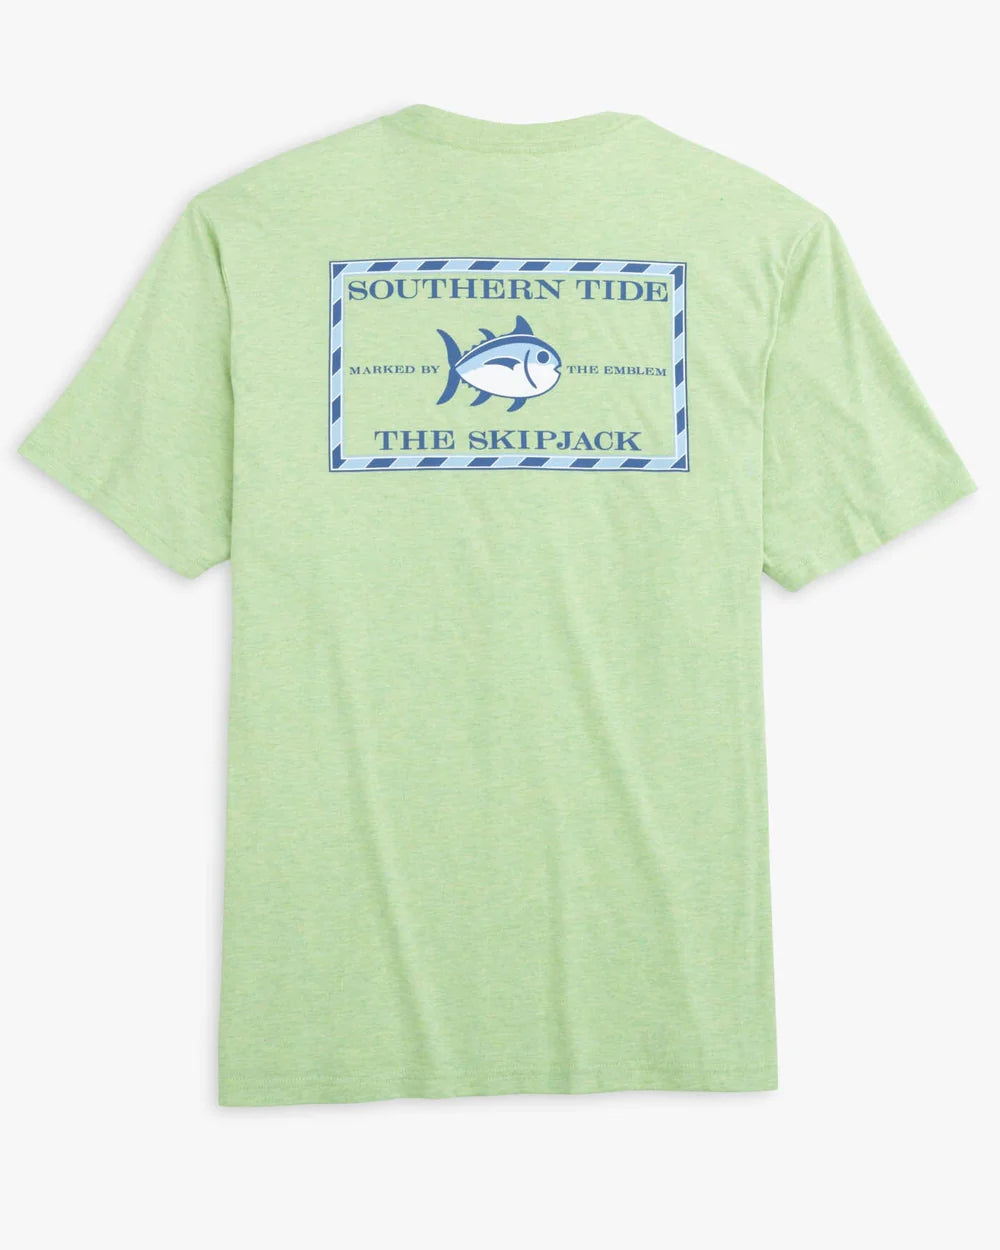 Southern Tide Original Skipjack T-Shirt - Heather Smoke Green